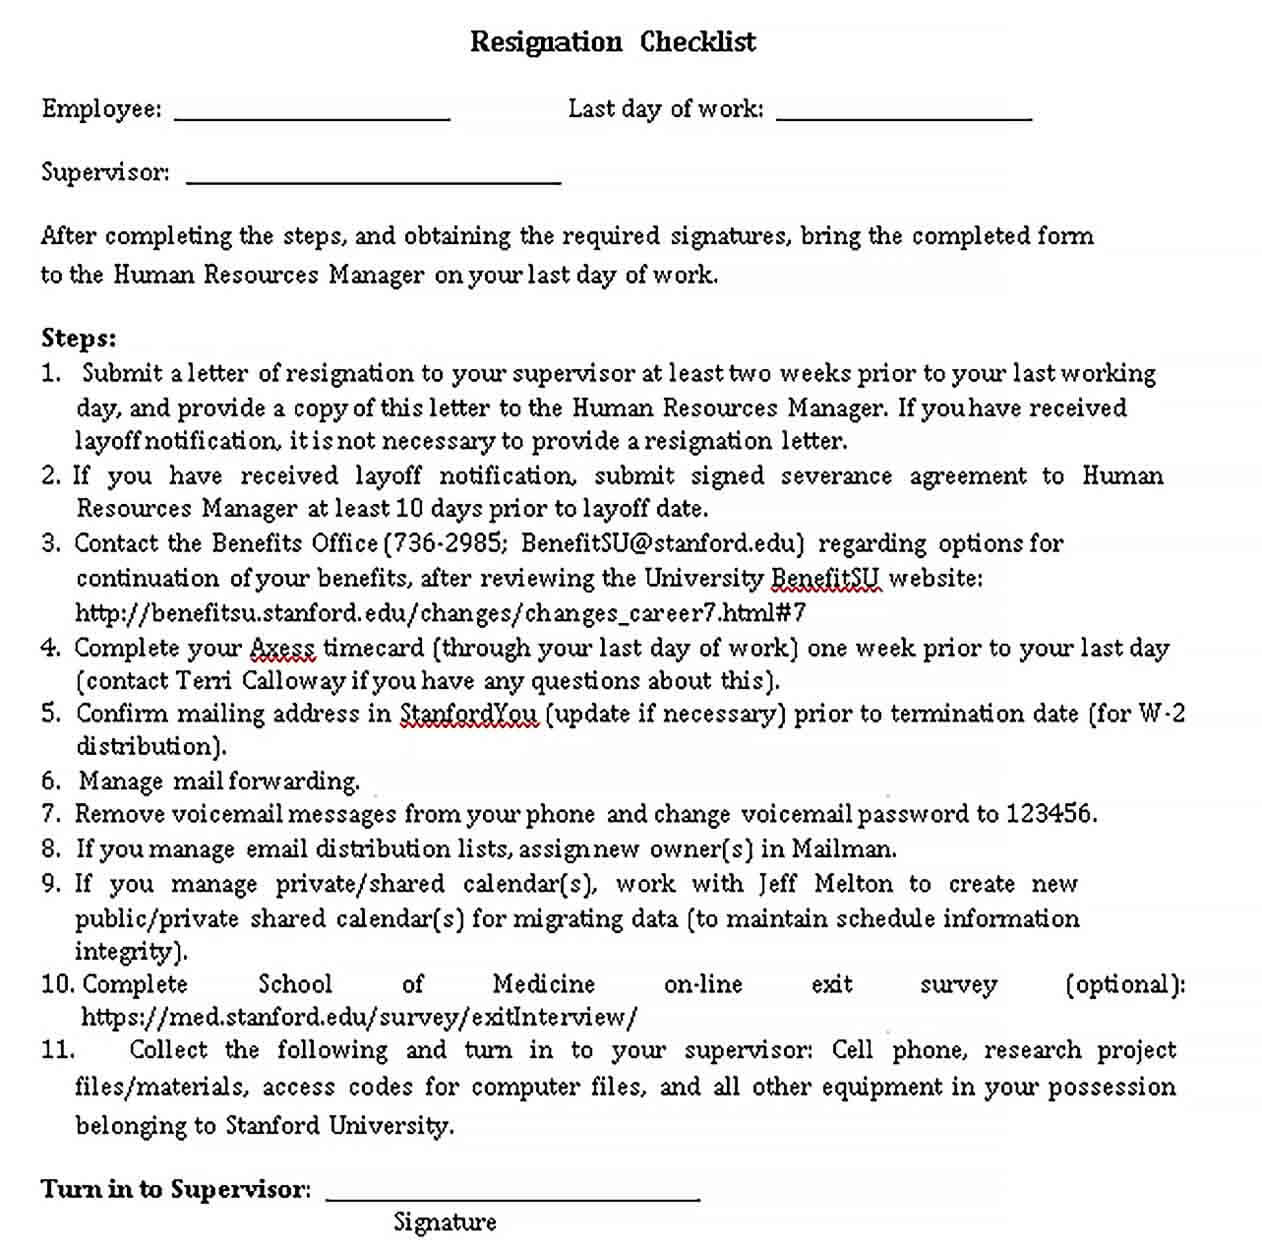 Sample Job Resignation Checklist Template